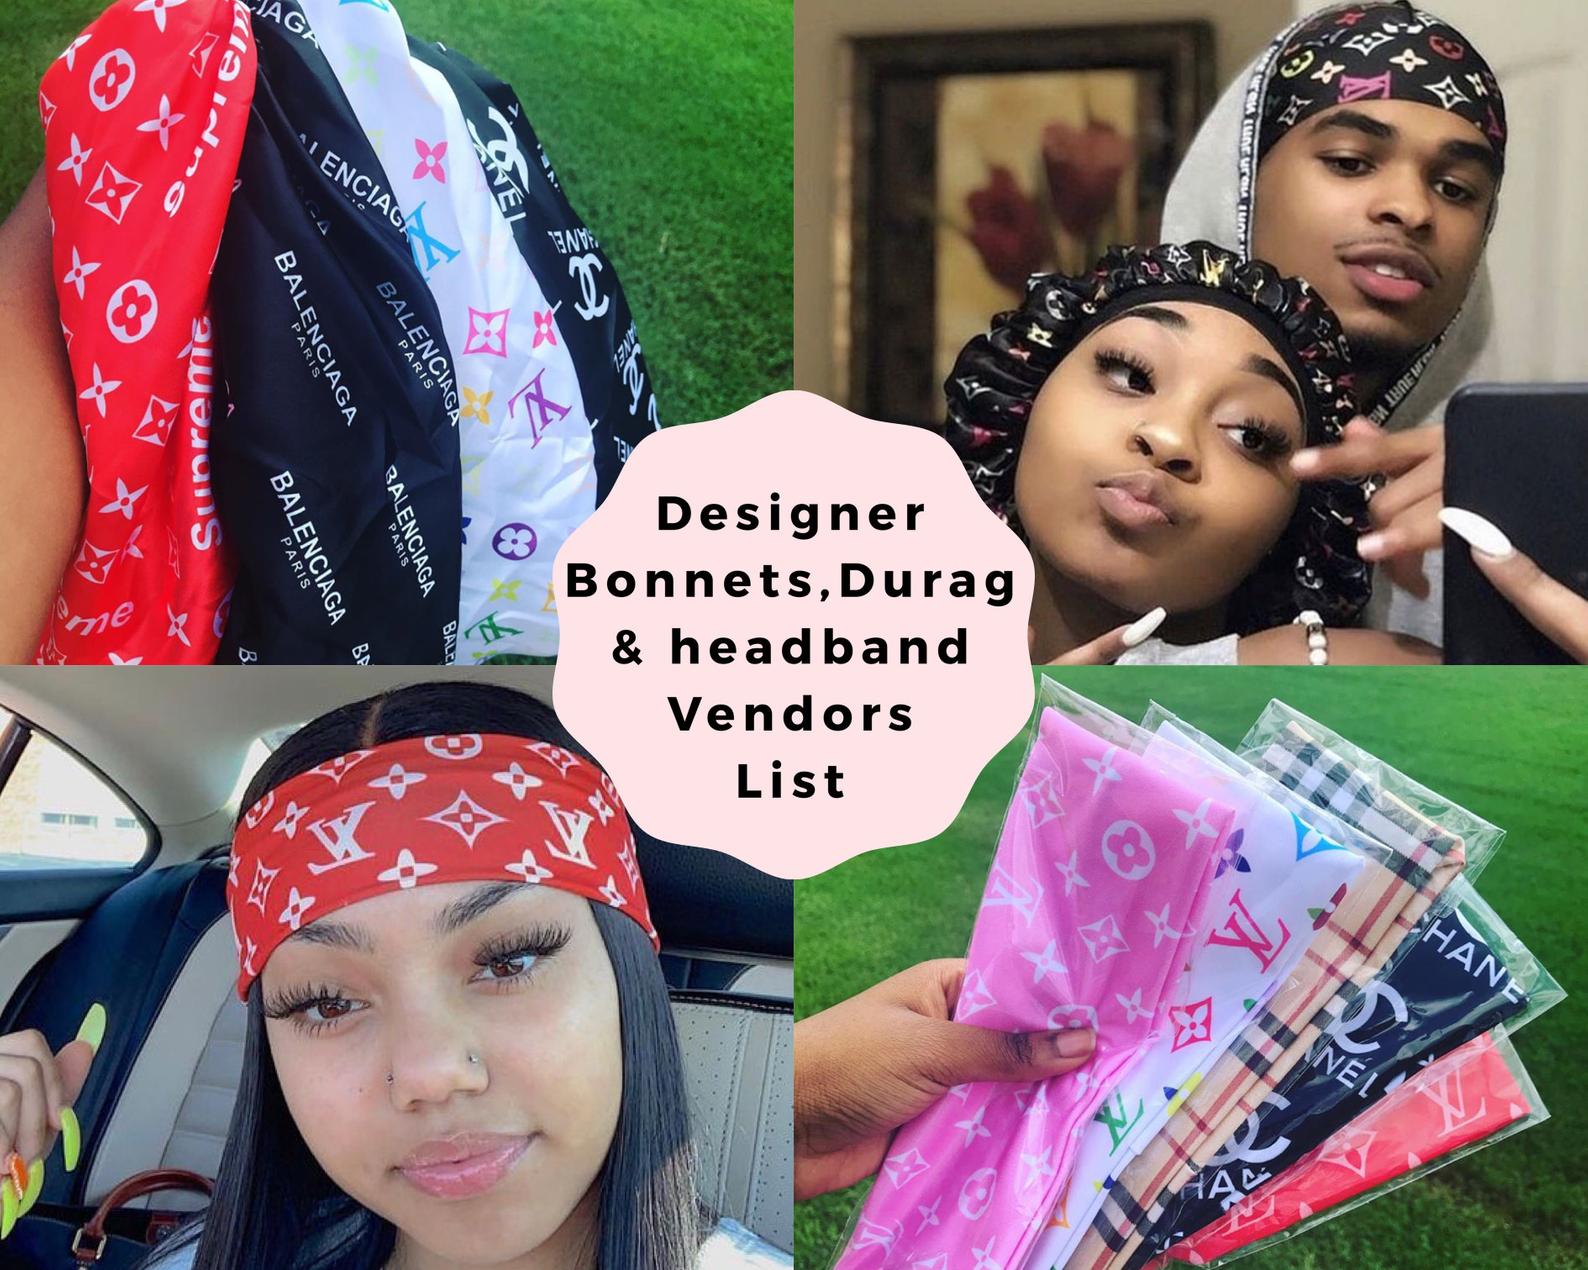 Bonnet and Durag 